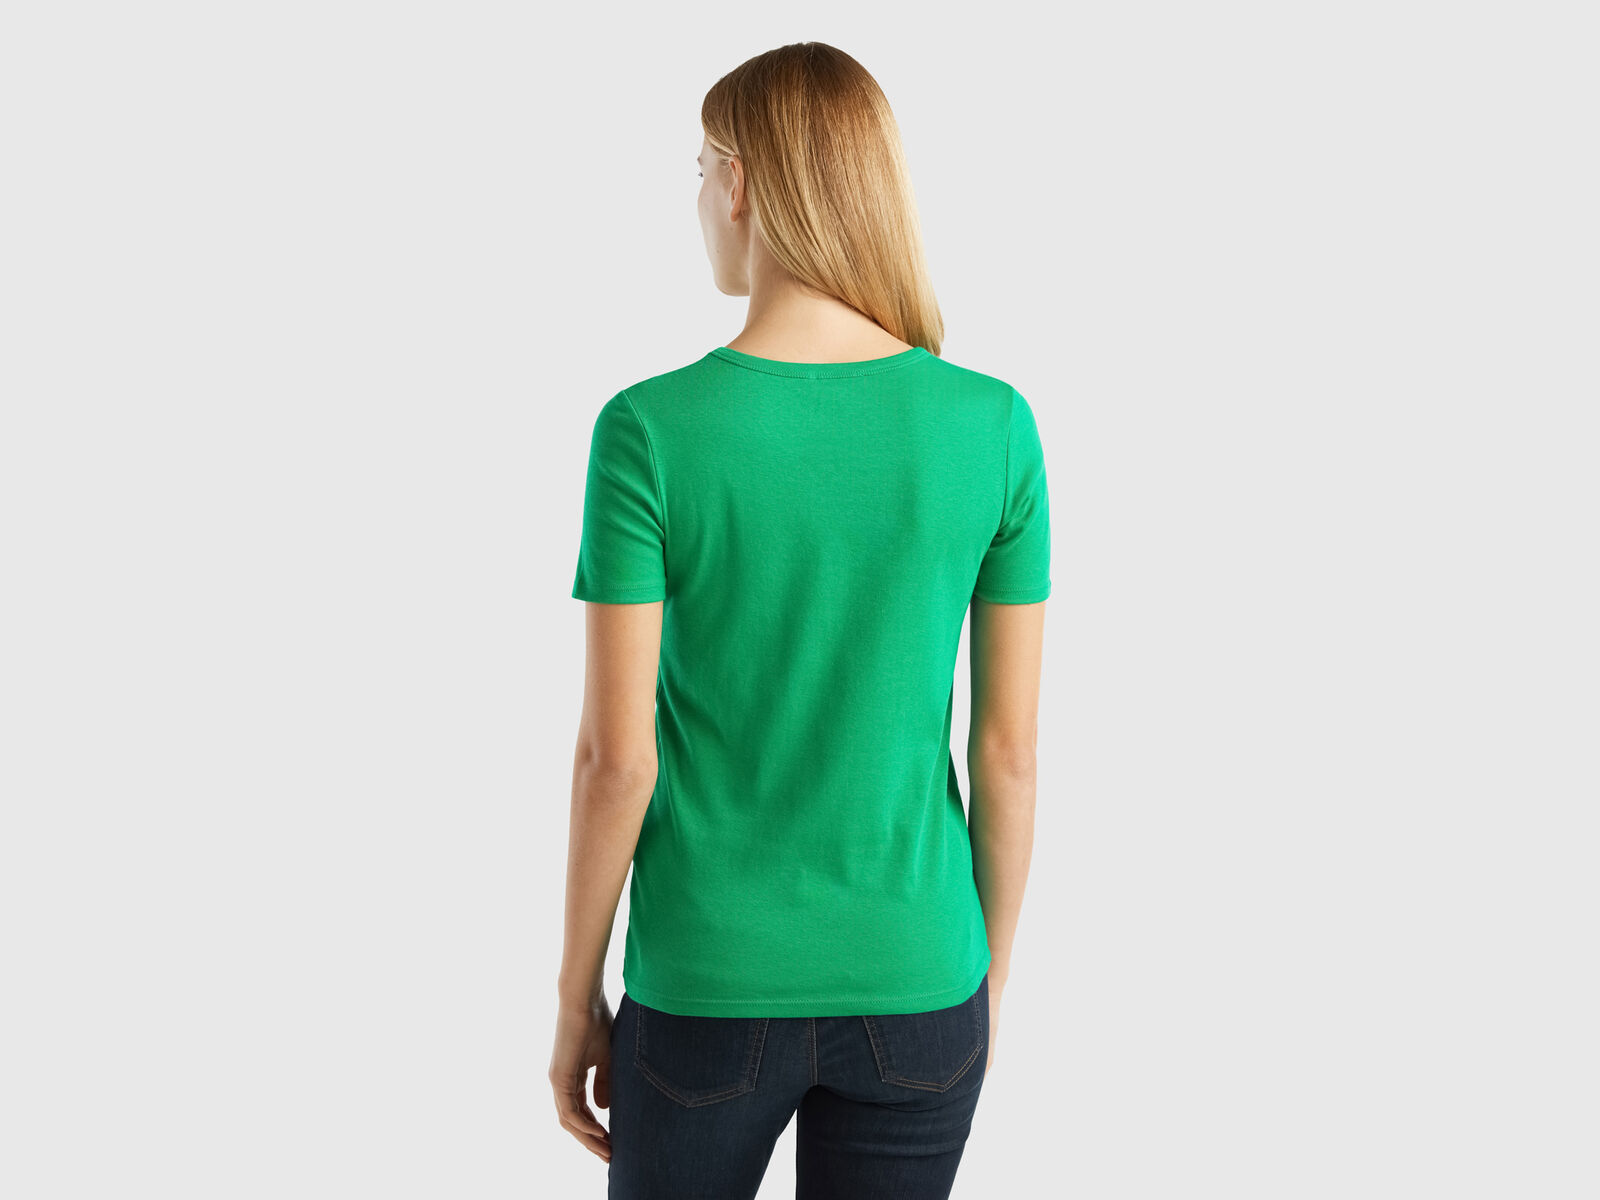 print Benetton Green cotton with in glitter logo 100% T-shirt - |